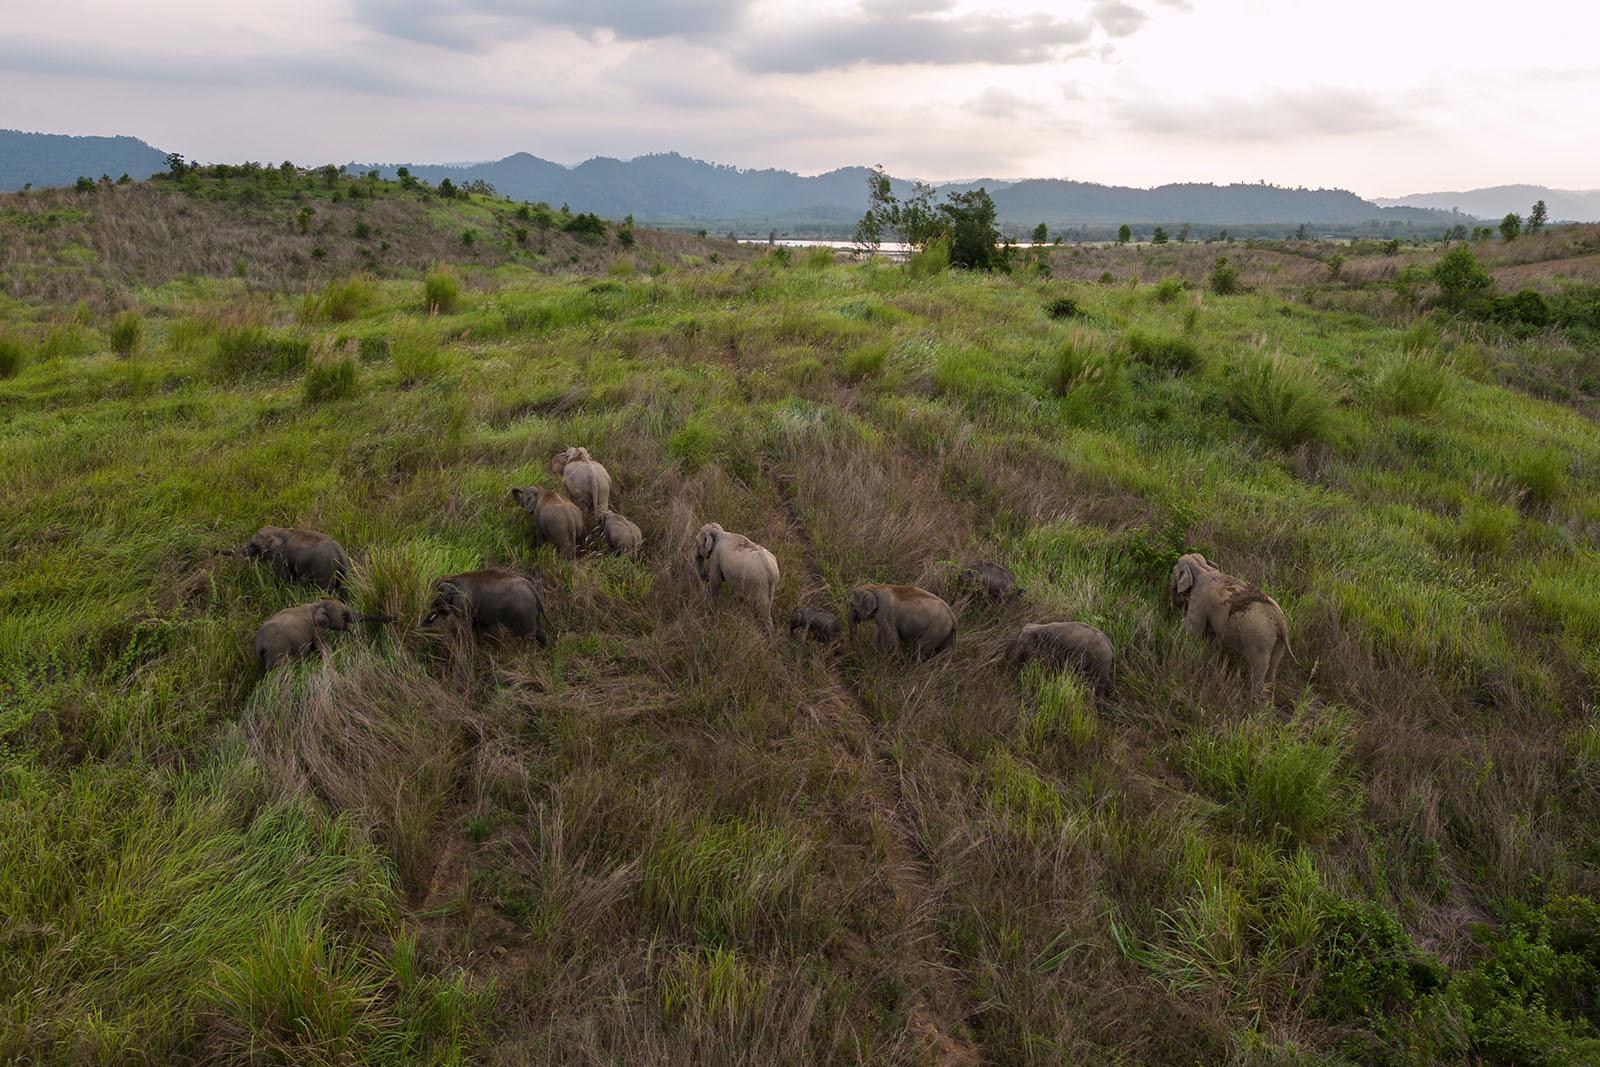 A FRAGILE COEXISTENCE - A herd of wild elephants roam the grassy hills of Praket...